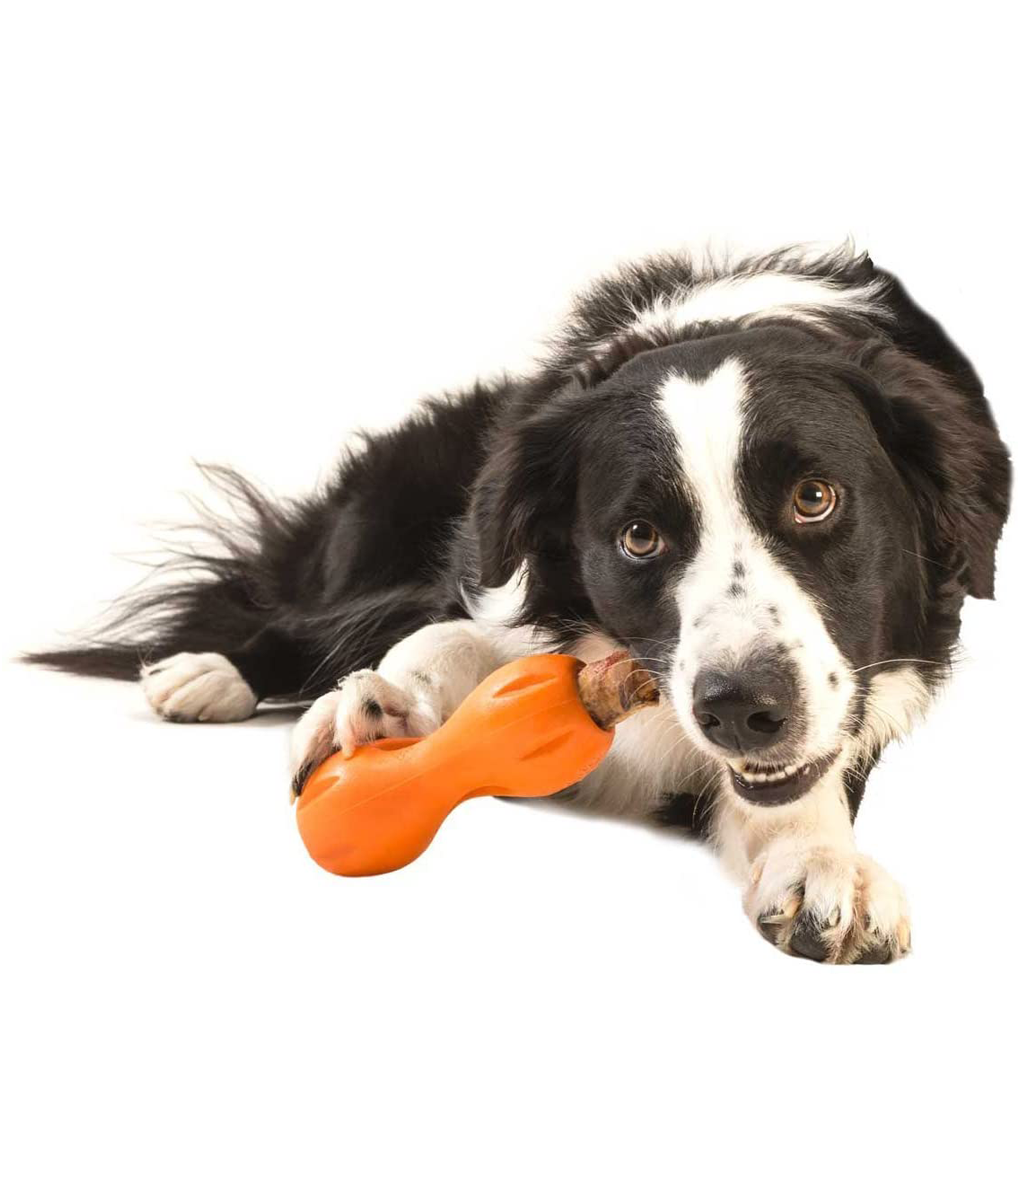 Qwizl Interactive Treat Dog Toy